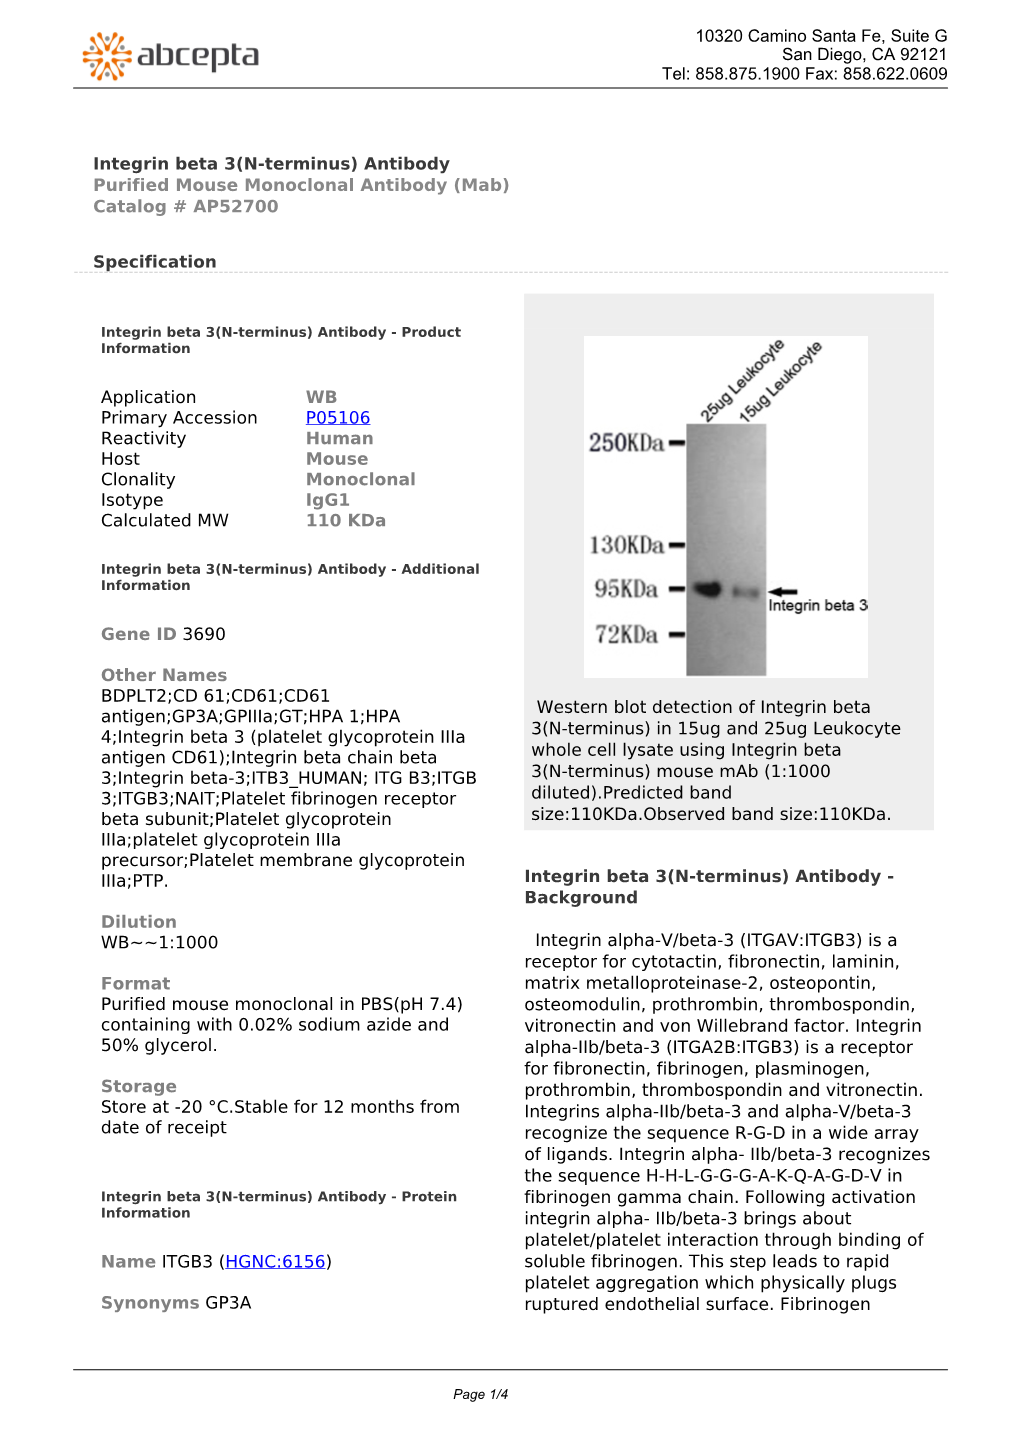 Integrin Beta 3(N-Terminus) Antibody Purified Mouse Monoclonal Antibody (Mab) Catalog # AP52700